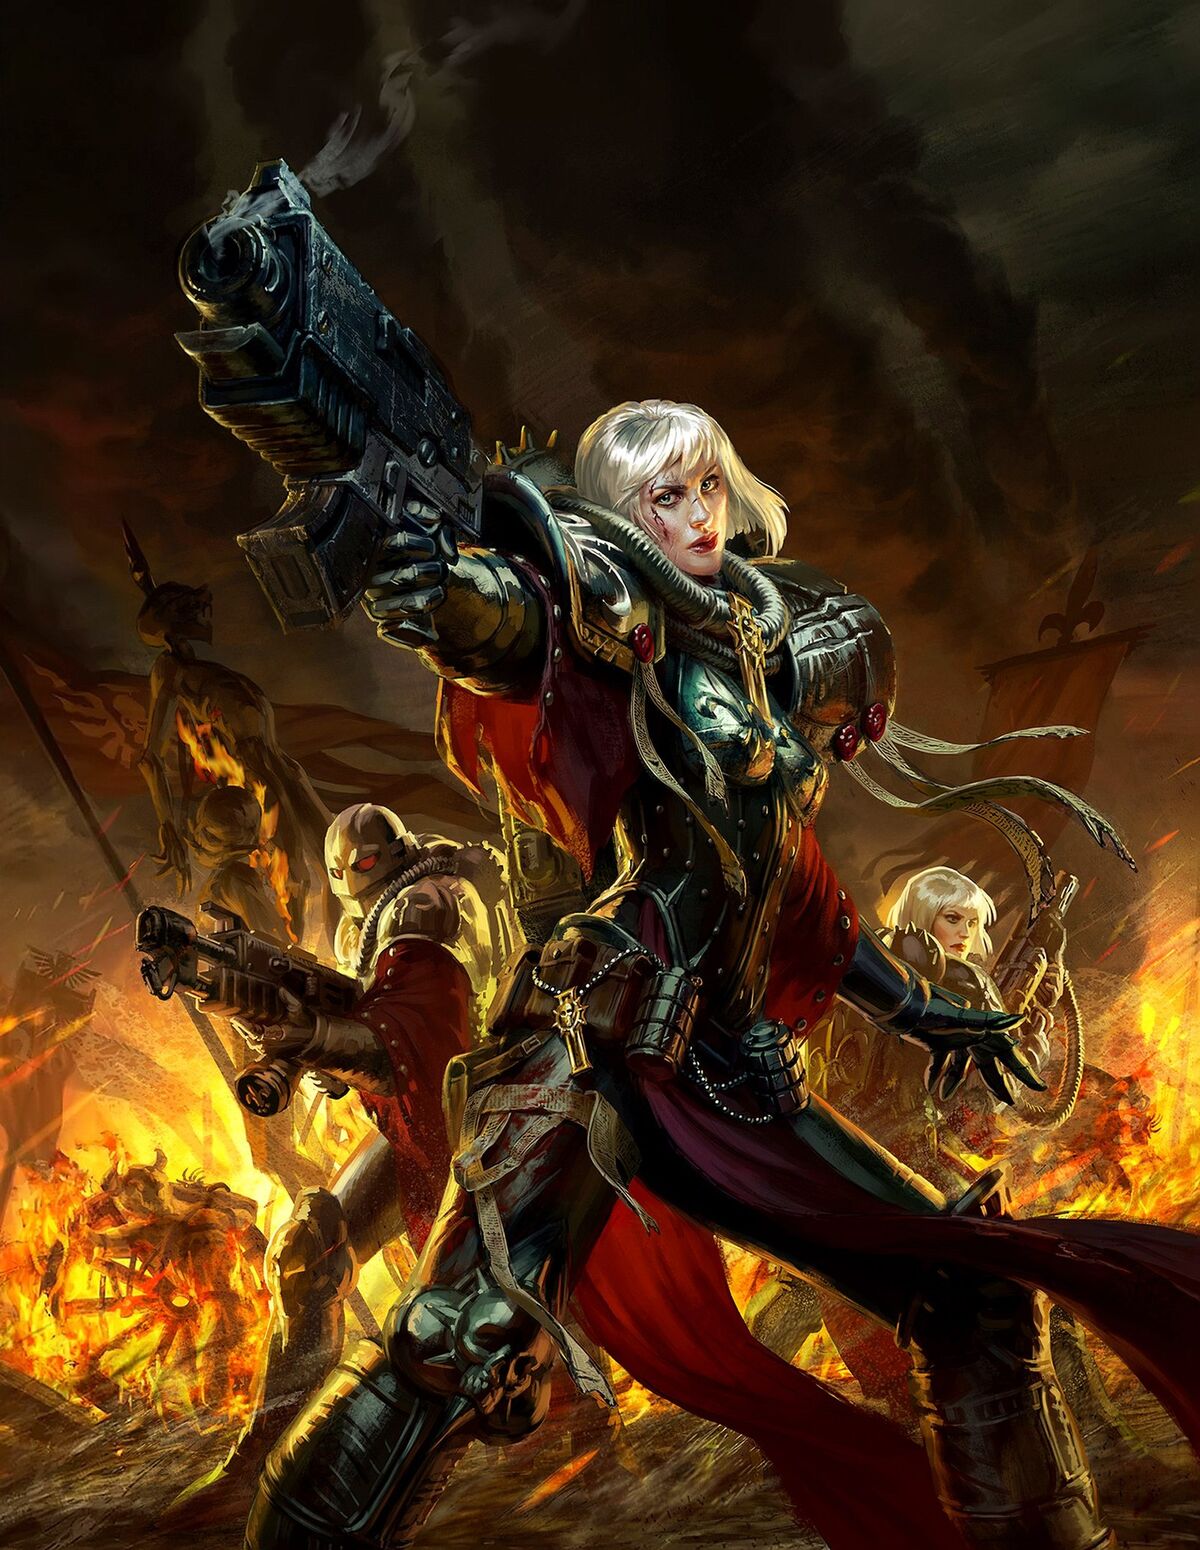 Warhammer 40K Adepta Sororitas - Battle Sisters Squad